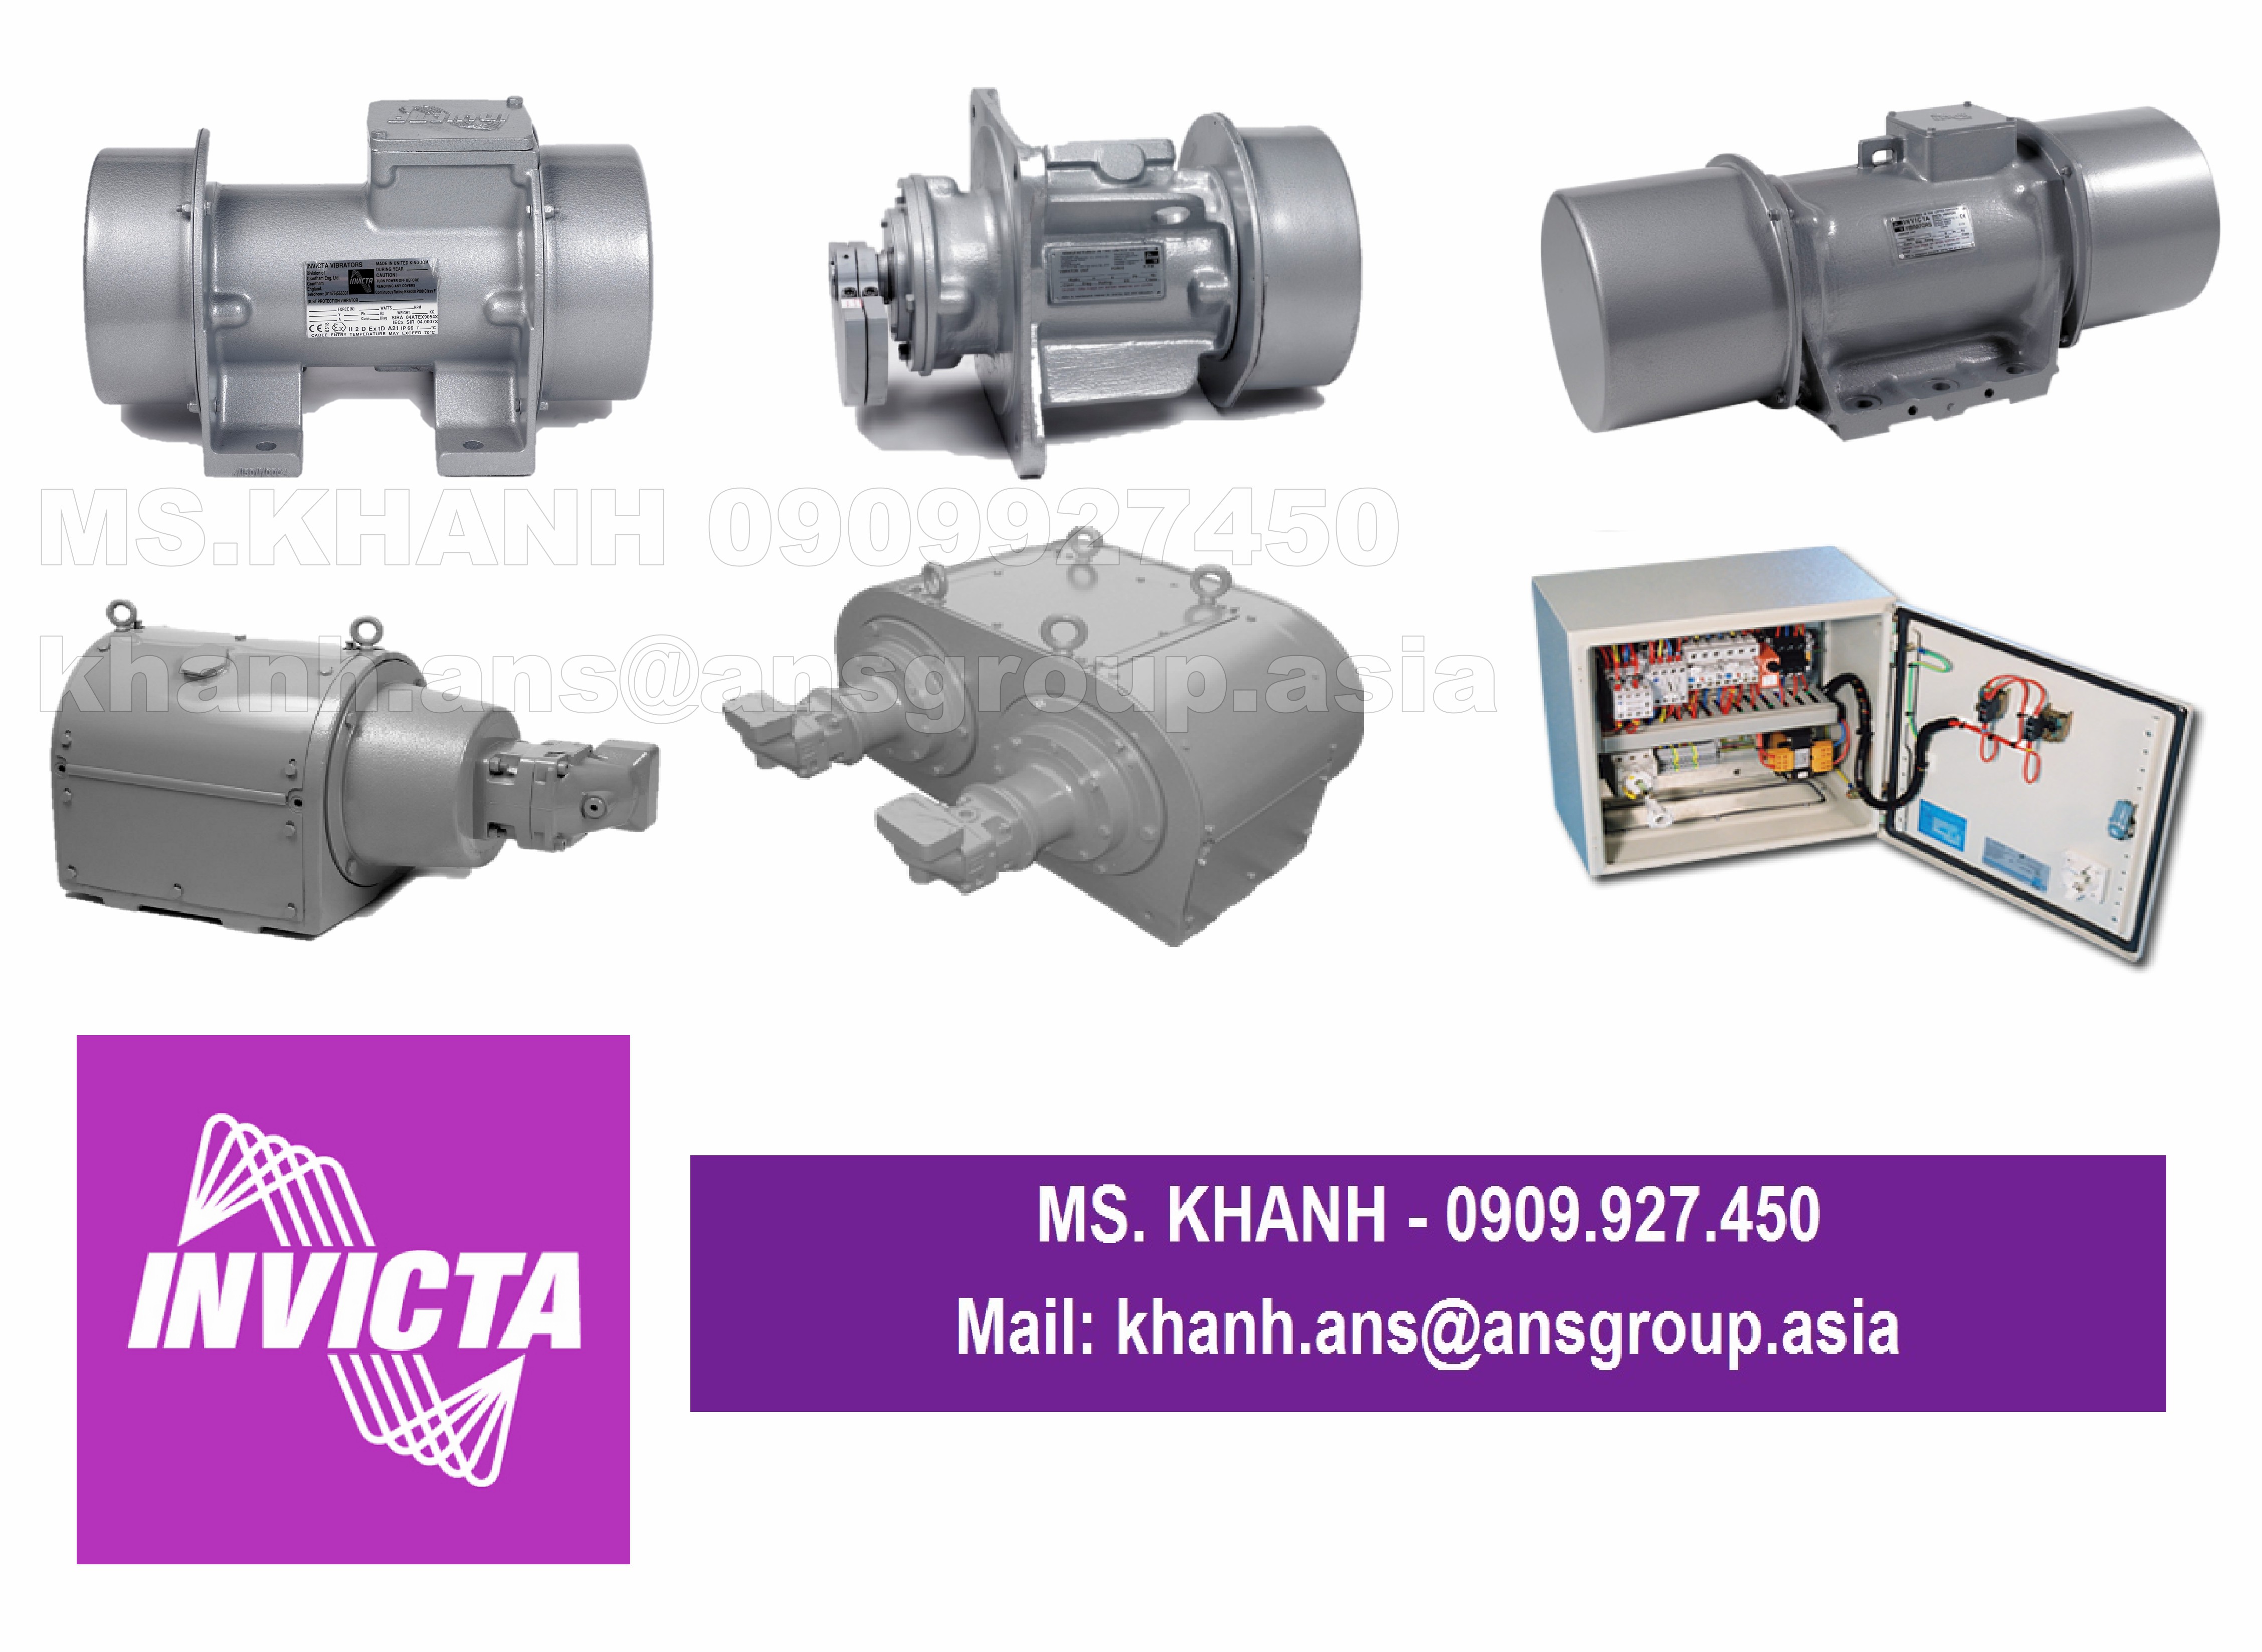 thiet-bi-blz-40-35-4-01-50-vibrator-atex-certiﬁed-in-dustproof-zones-invicta-vibrators-vietnam.png